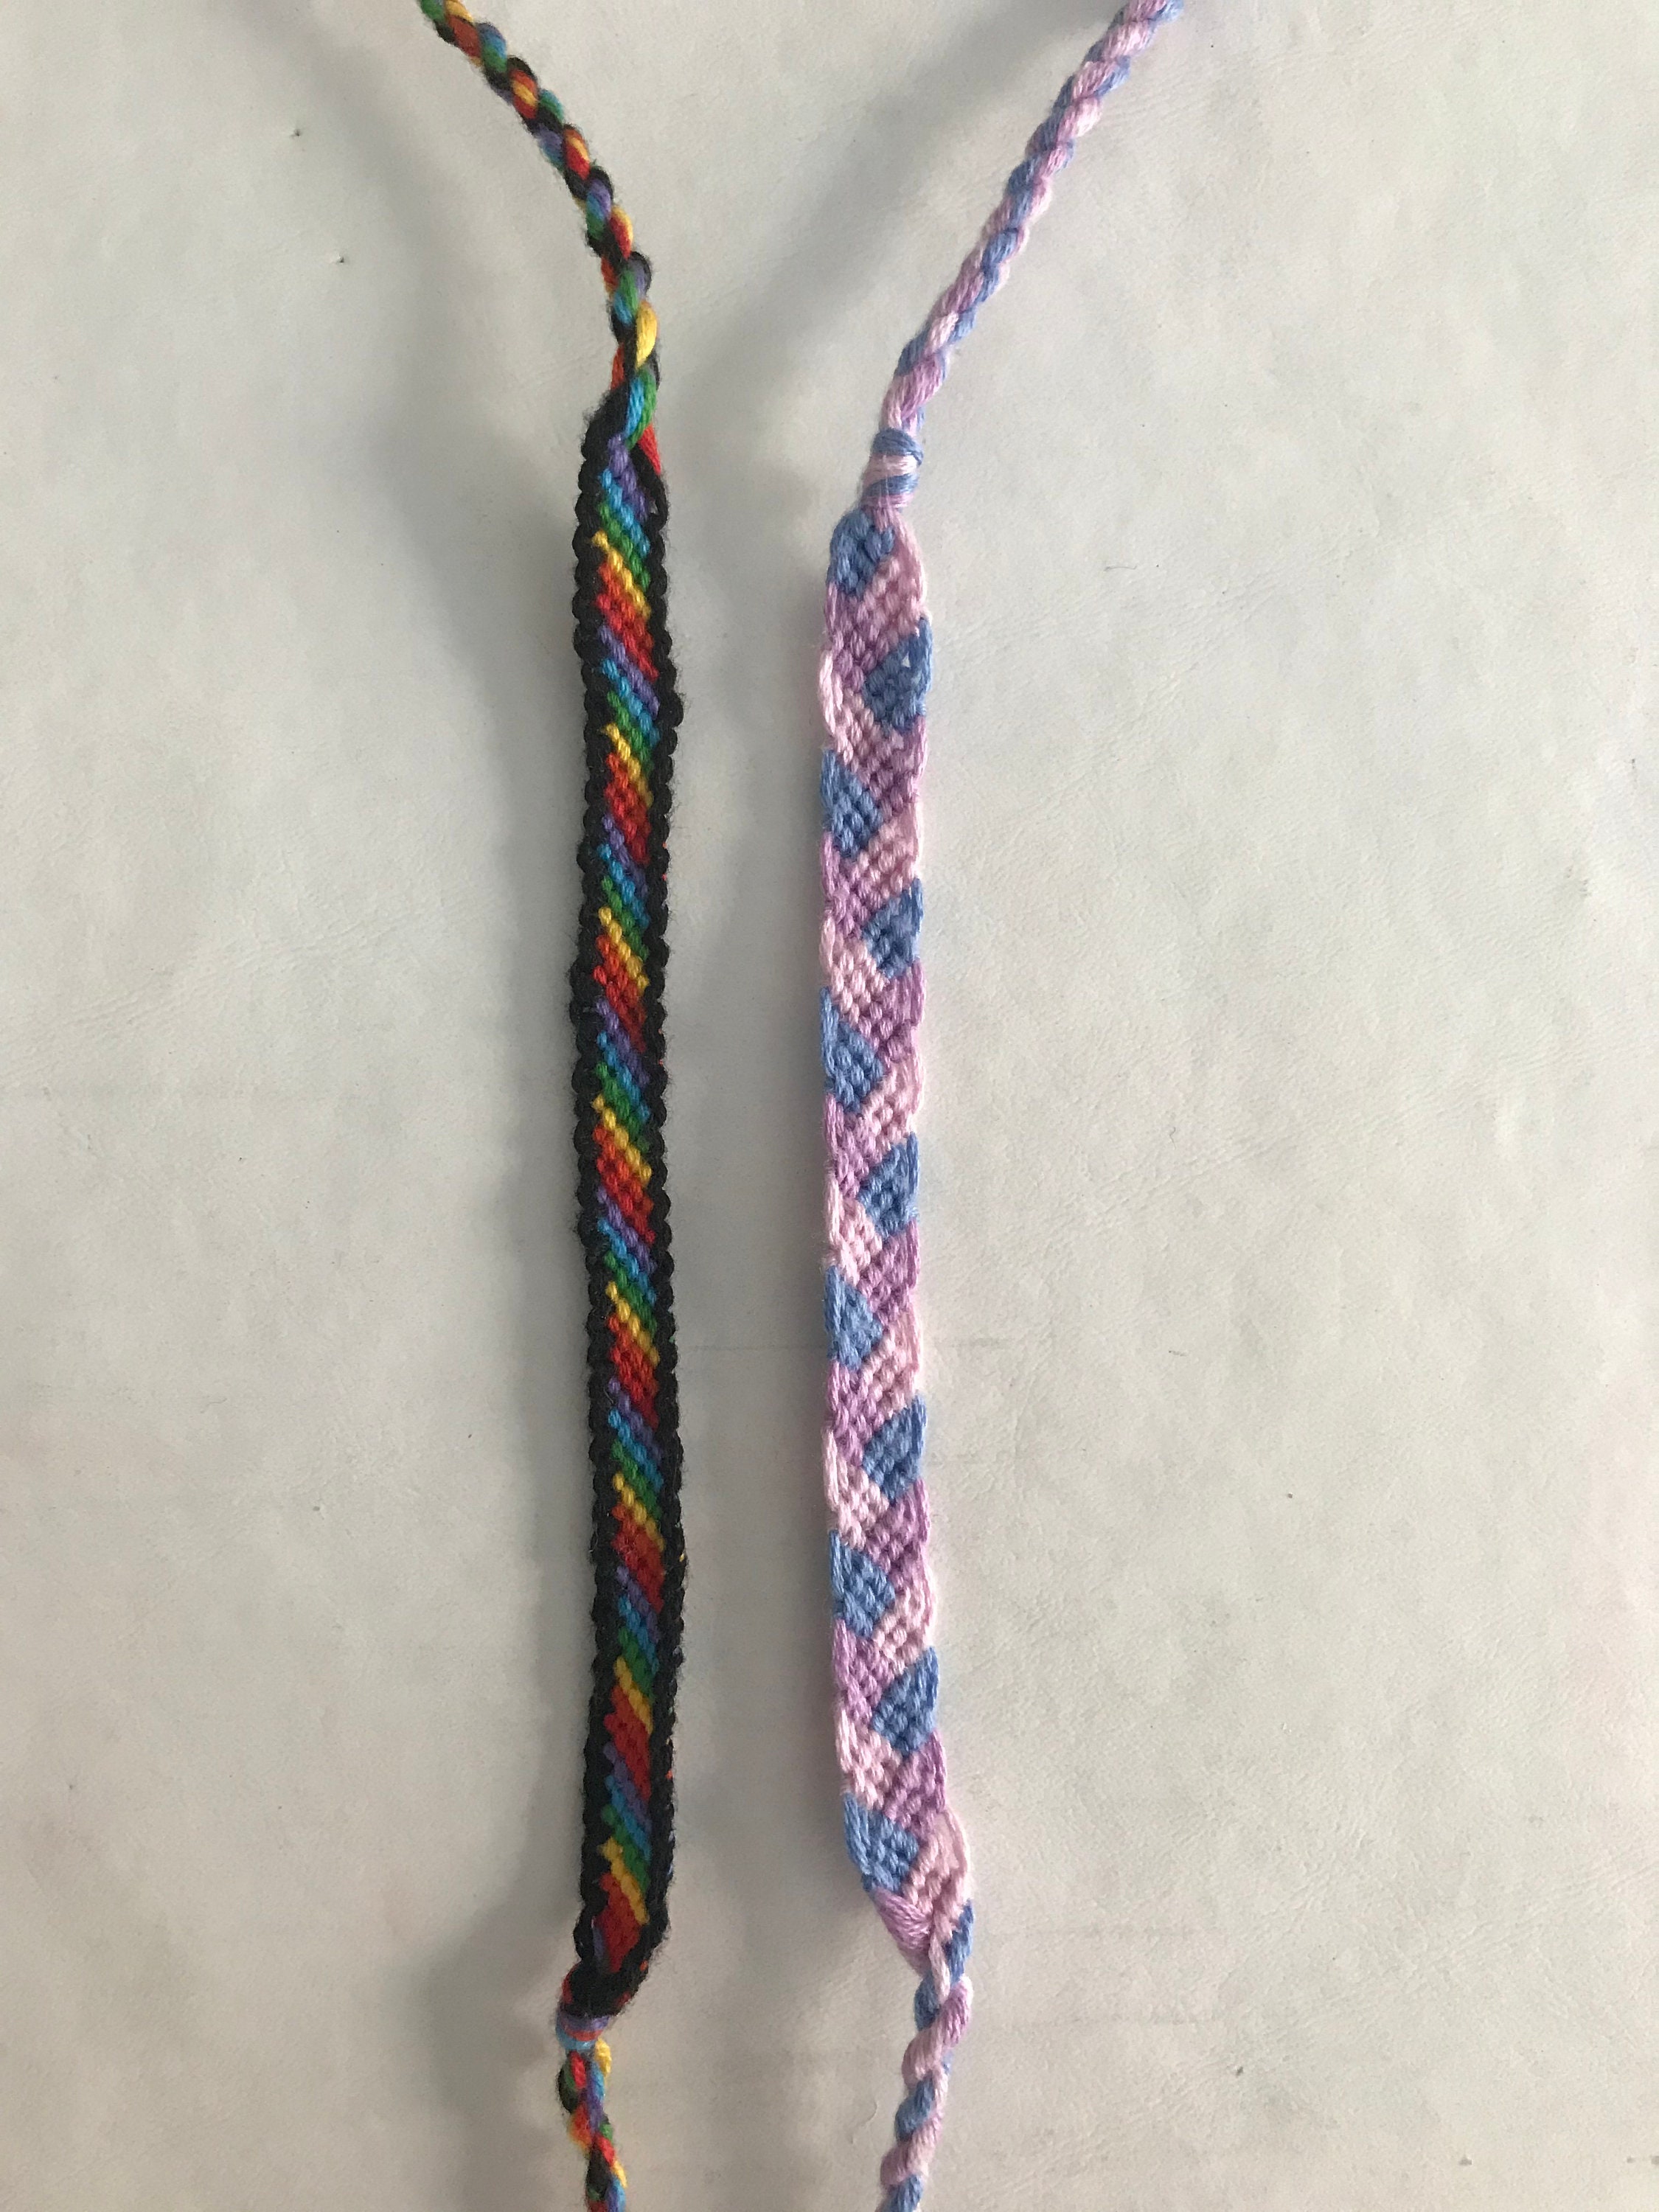 How to Make Candy Stripe Friendship Bracelets - Sew Crafty Me